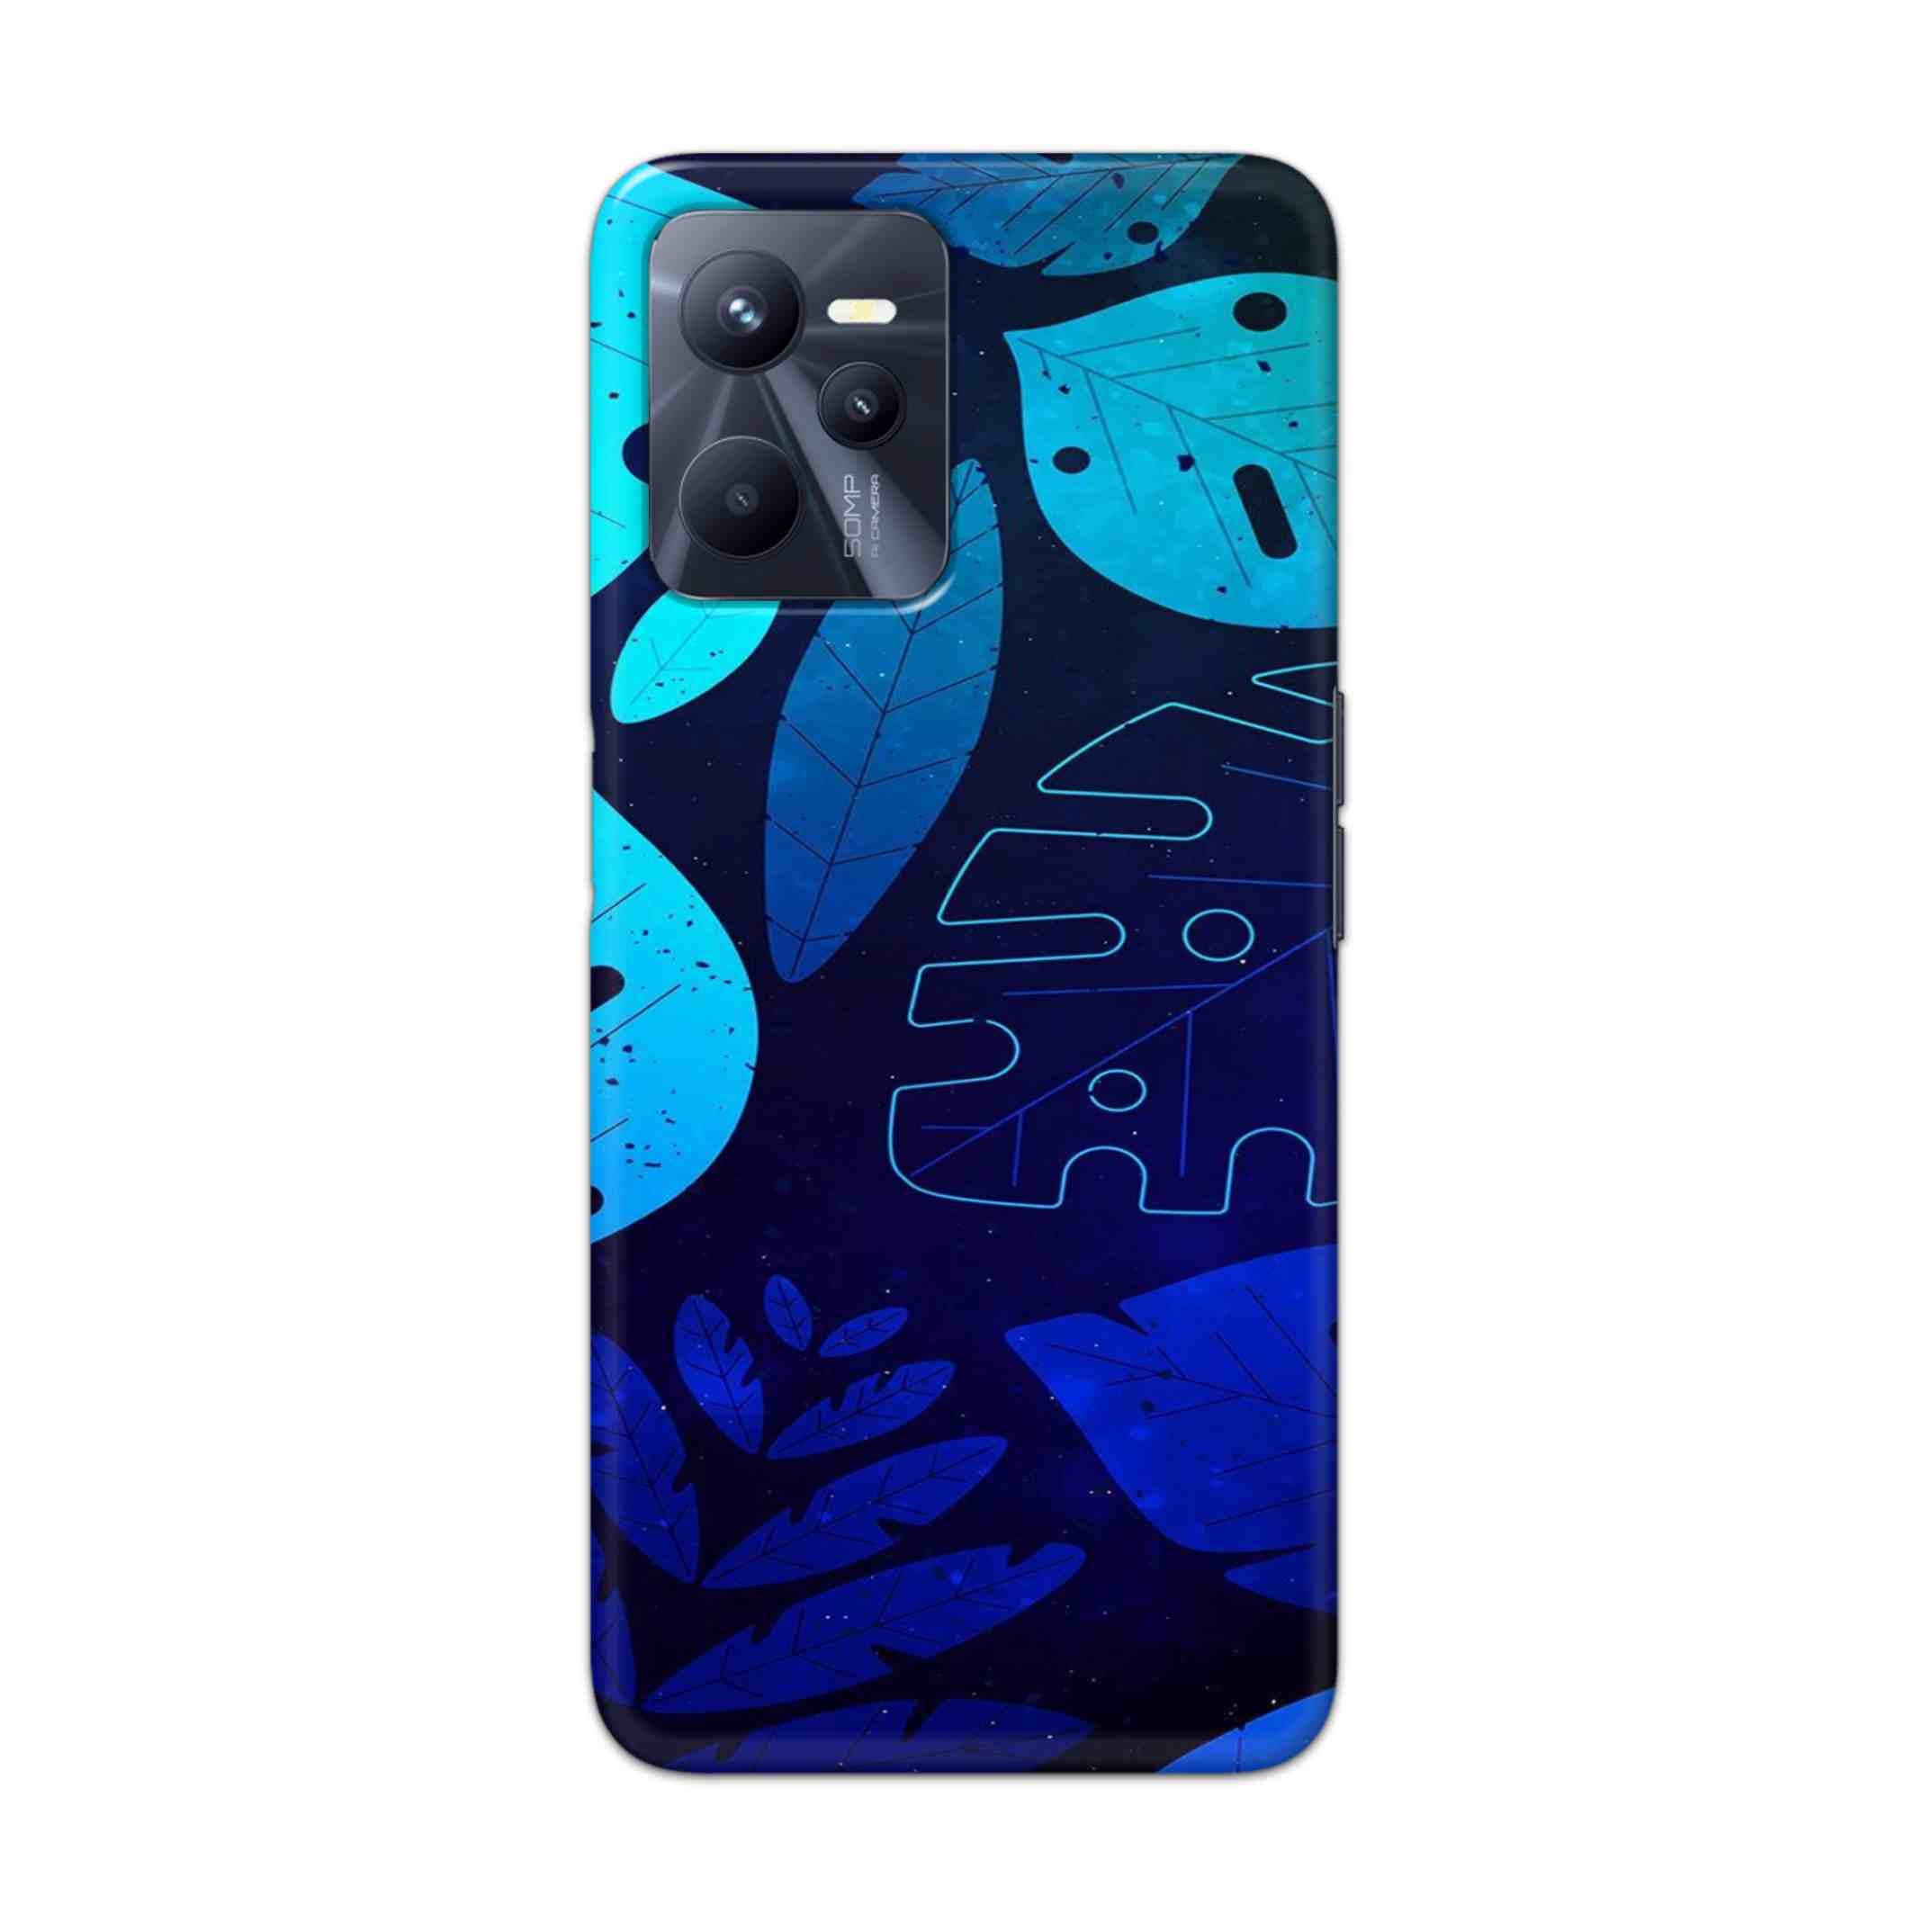 Buy Neon Leaf Hard Back Mobile Phone Case Cover For Realme C35 Online